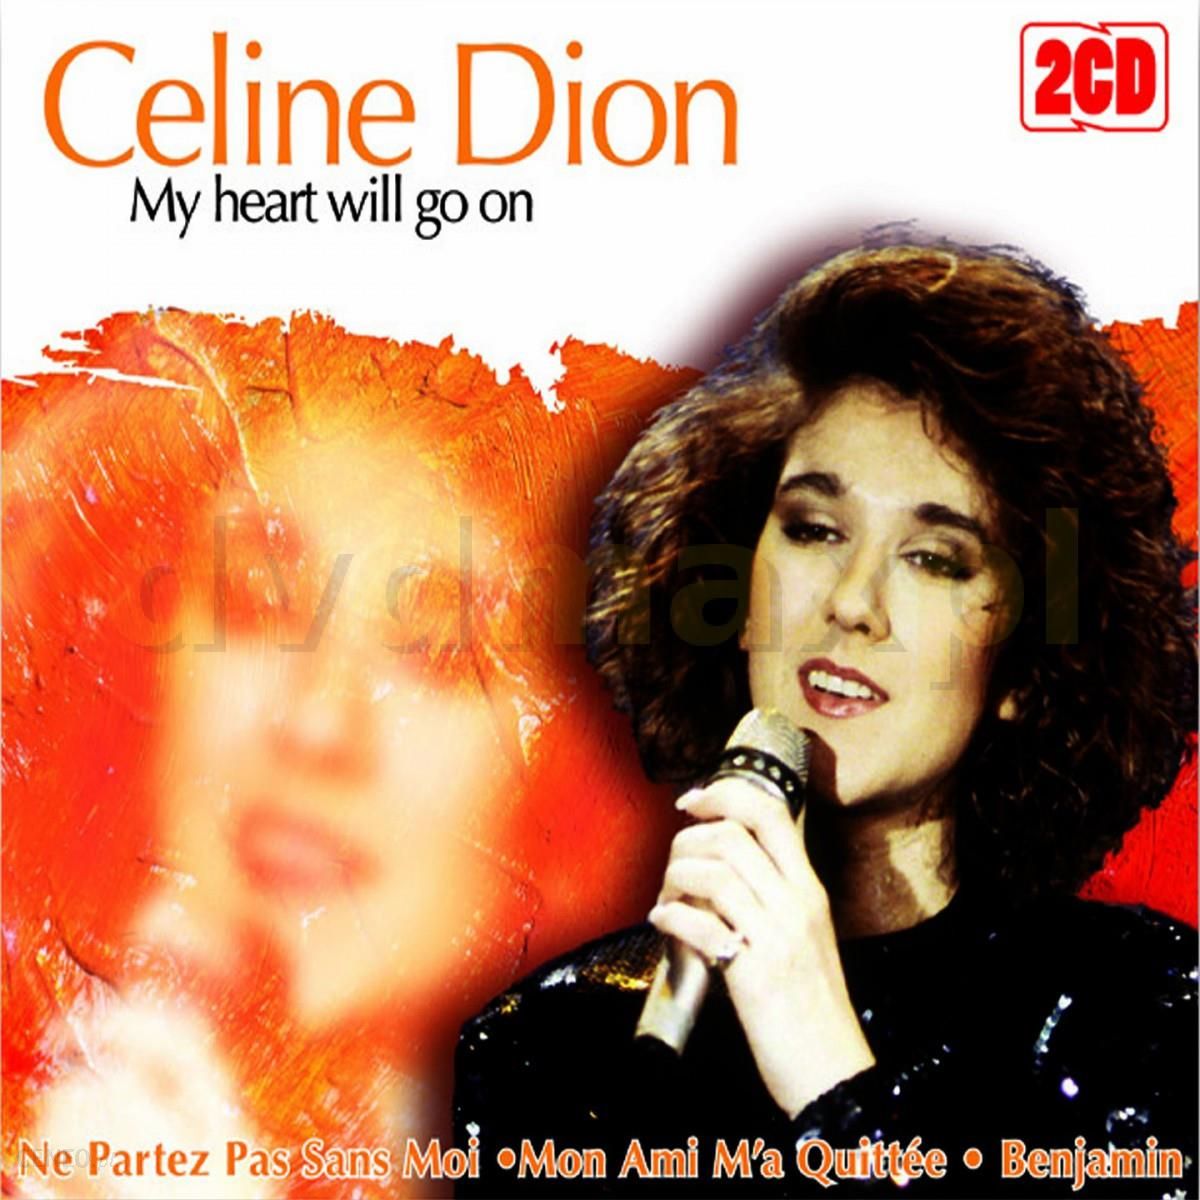 My Heart will go on Селин Дион. Celine Dion my Heart will go on обложка. Celine Dion my Heart will go on Cover. Celine Dion - my Heart will альбом. Вил гоу песня